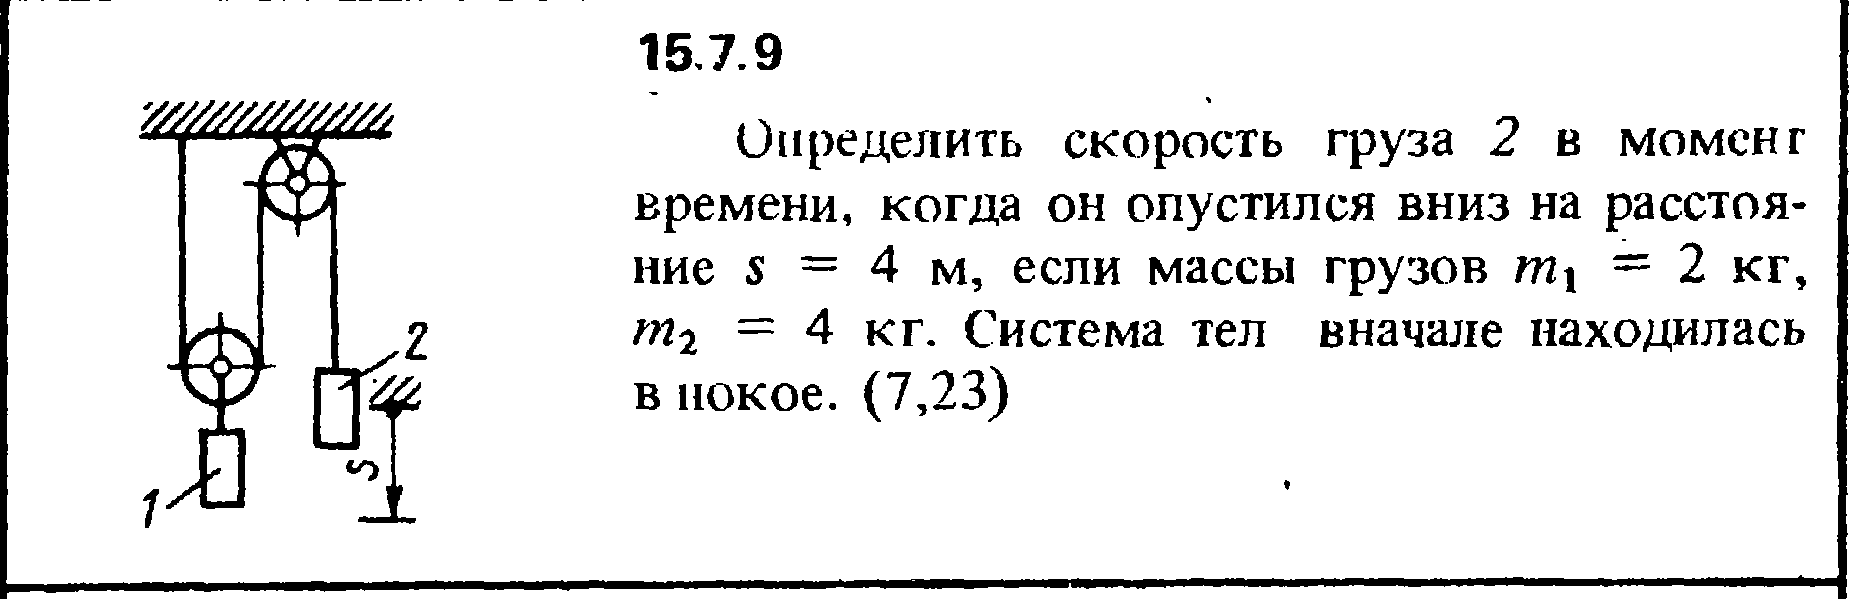 Решение задачи 15.7.9 из сборника Кепе О.Е. 1989 года